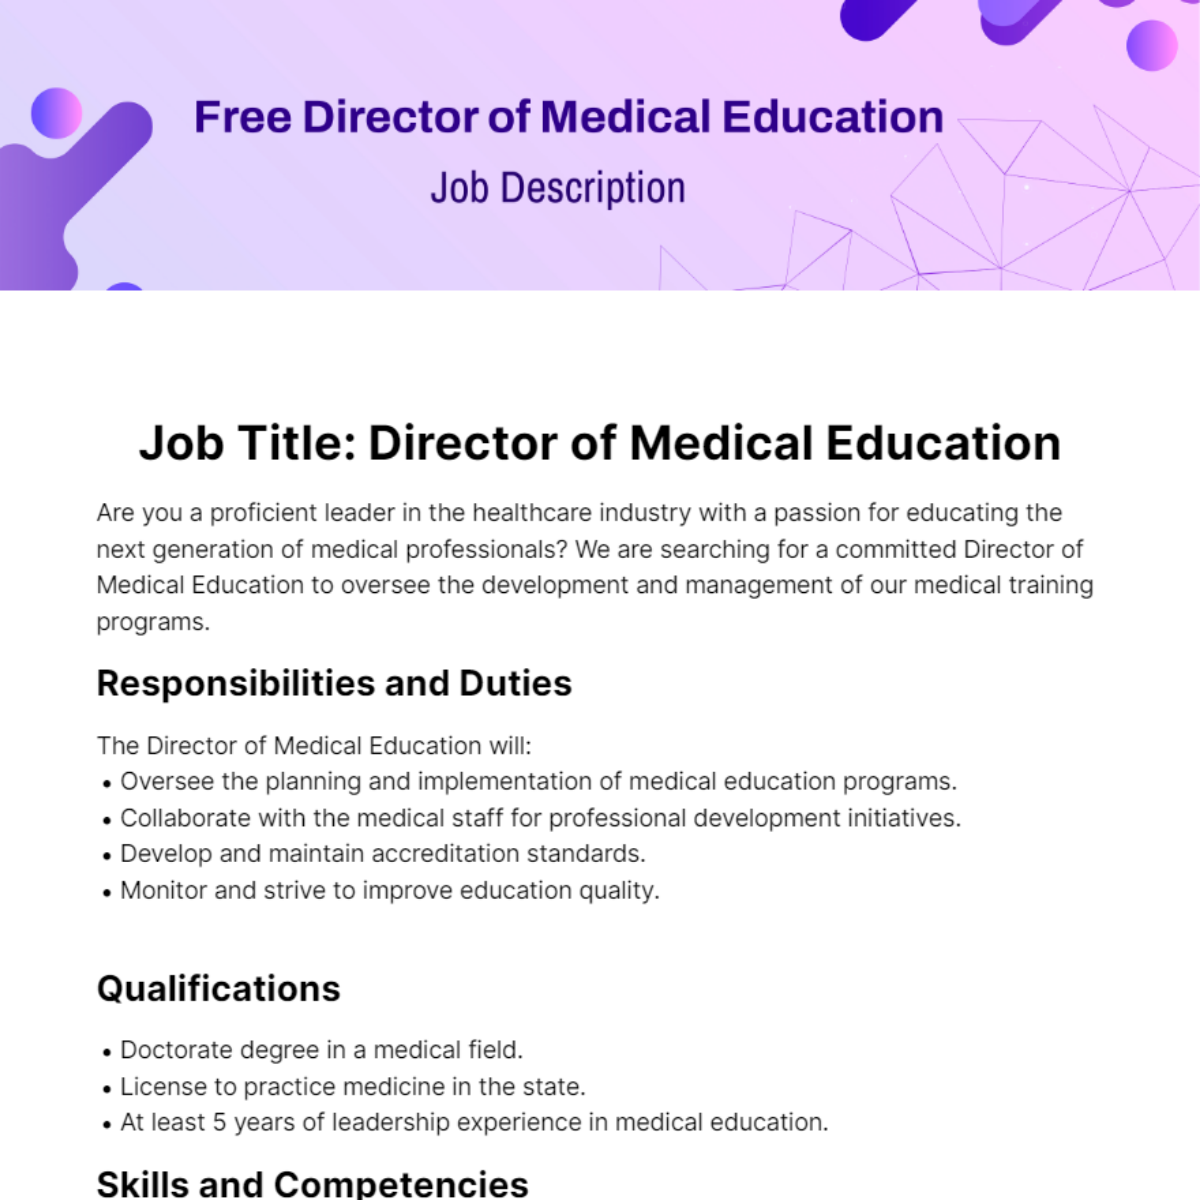 Free Director of Medical Education Job Description Template